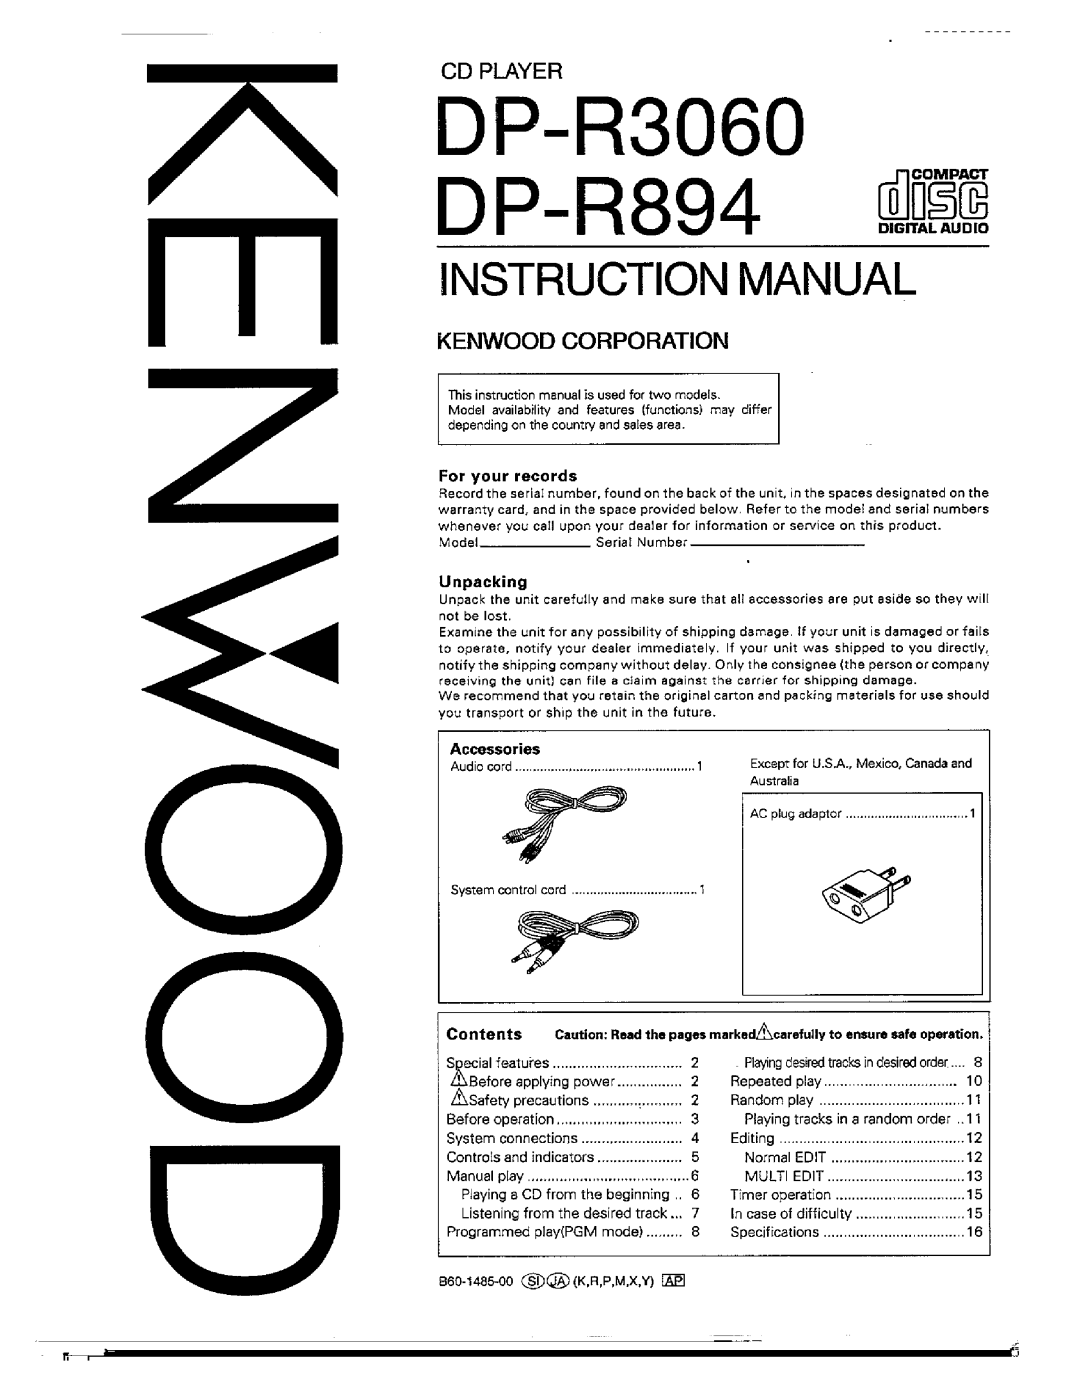 Kenwood DP-R894, DP-R3060 manual 